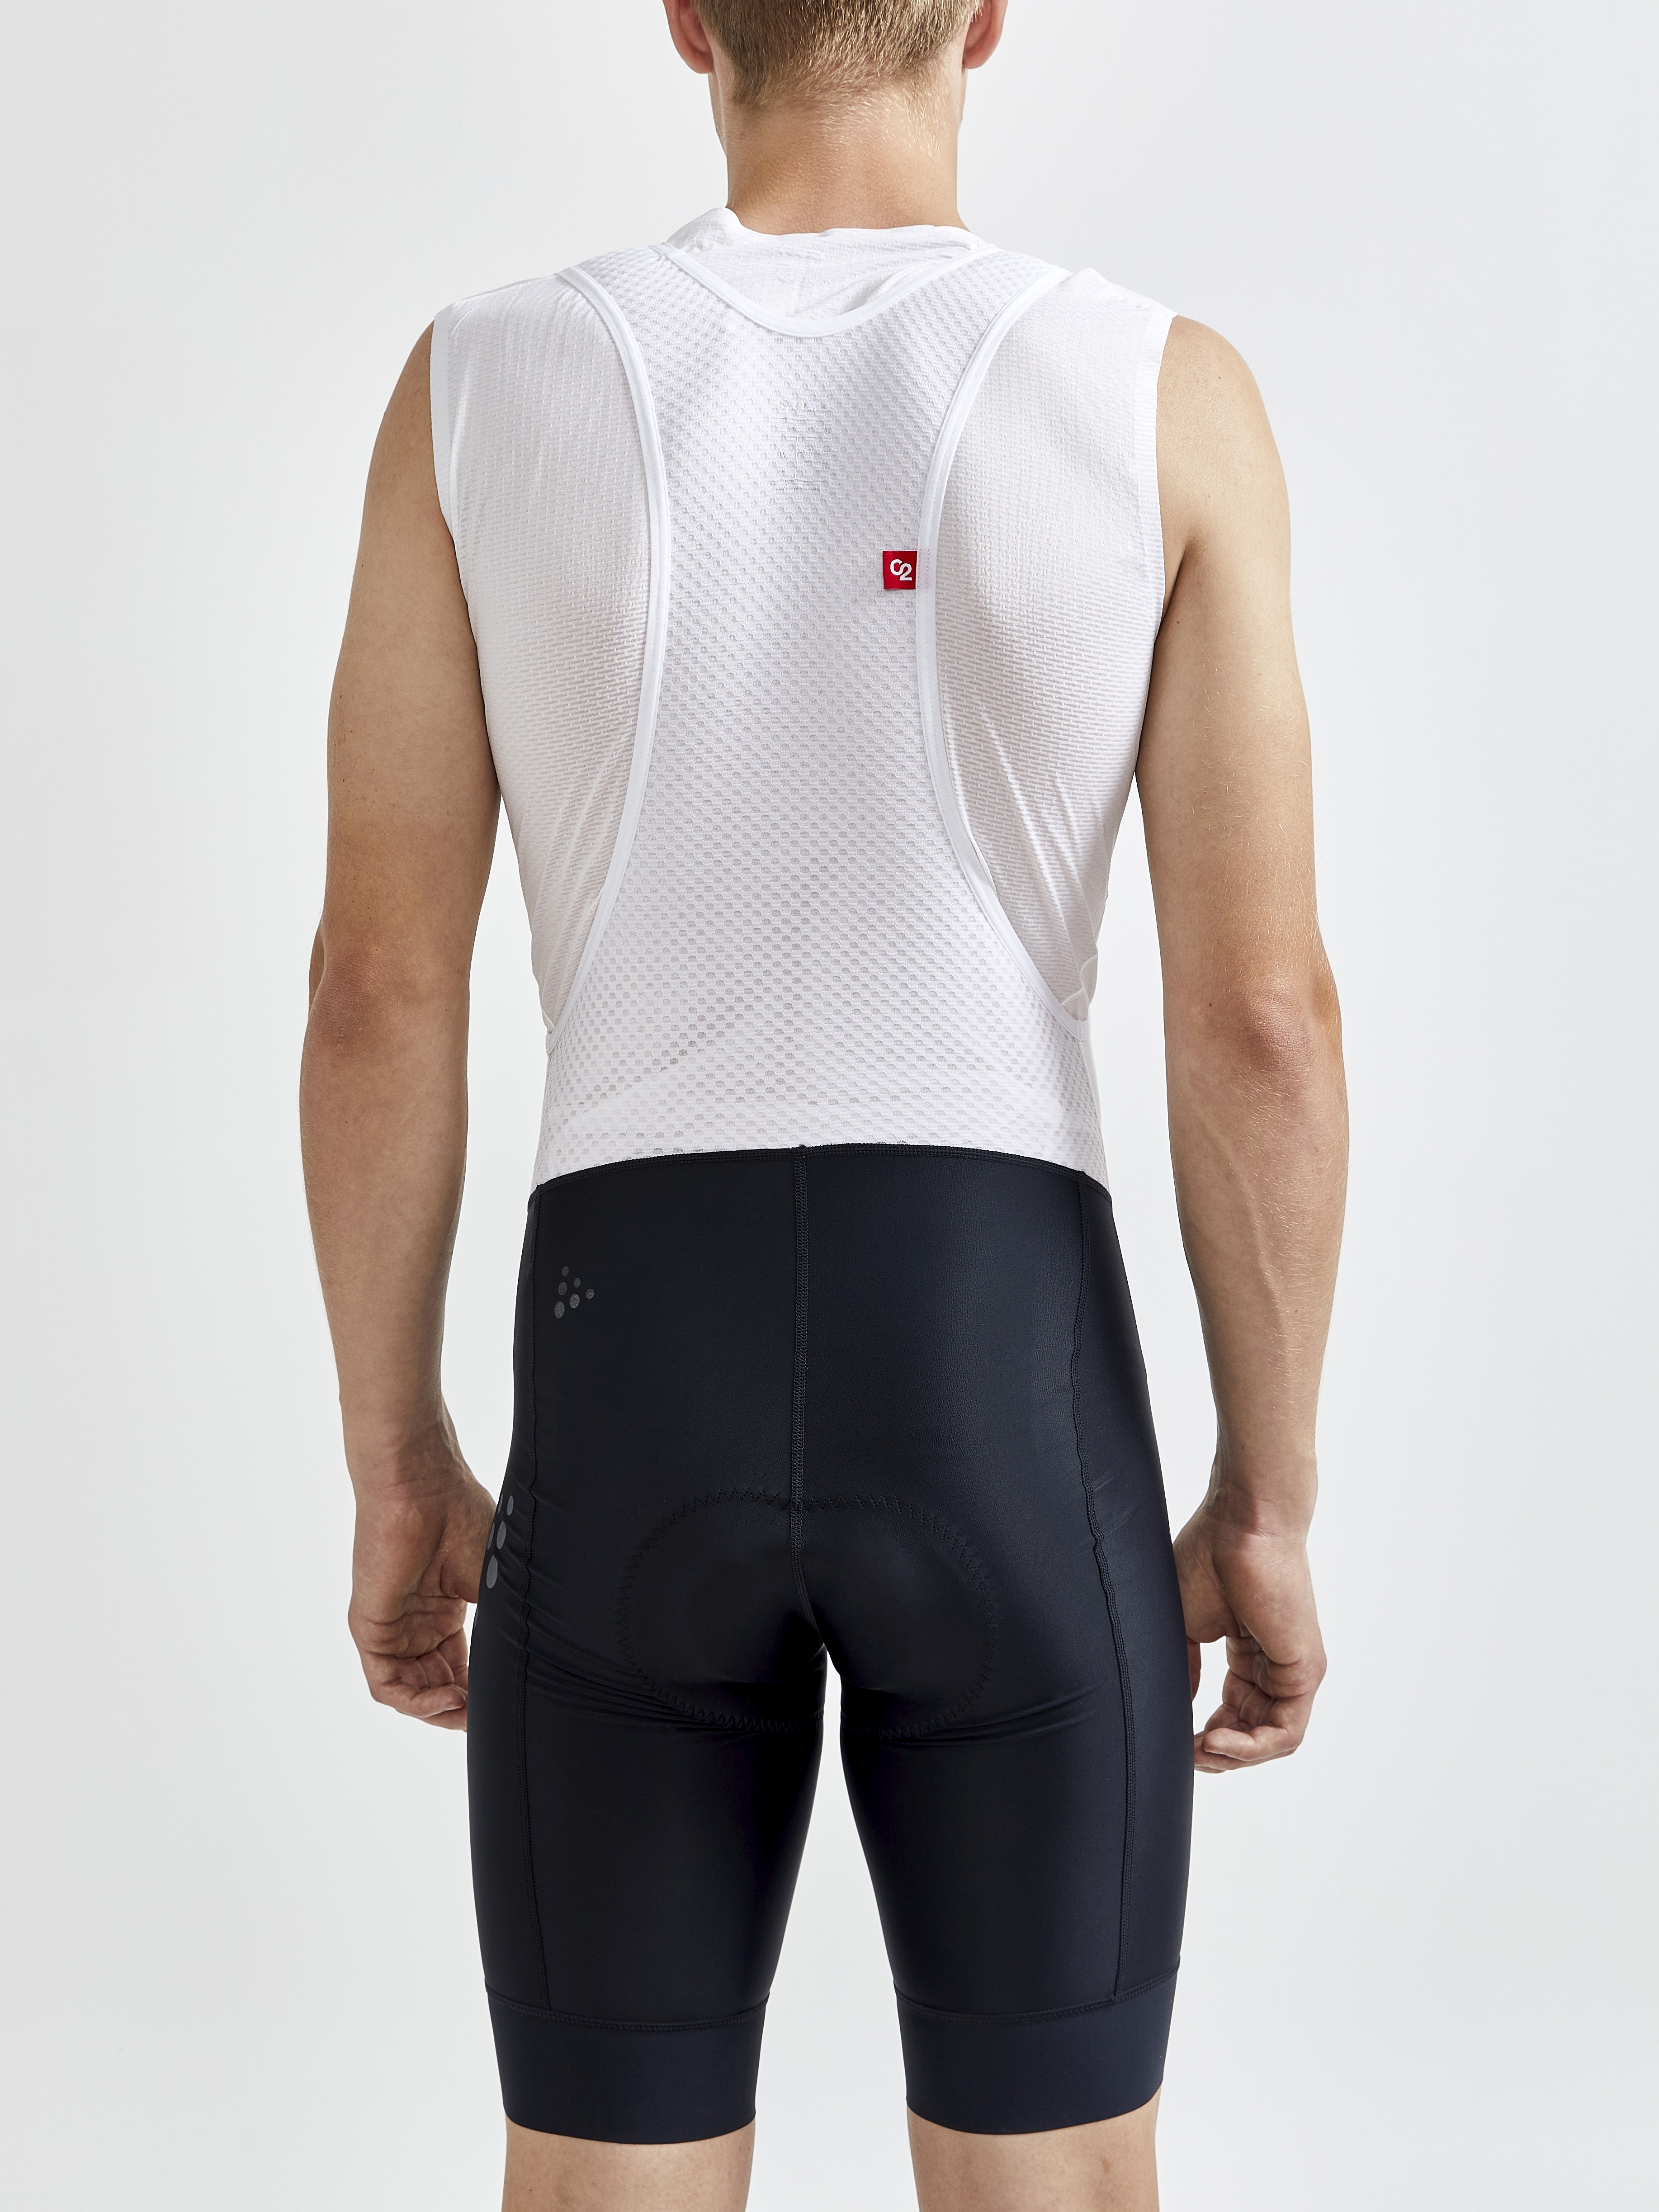 Adv Endurance Bib Shorts M - Black | Craft Sportswear